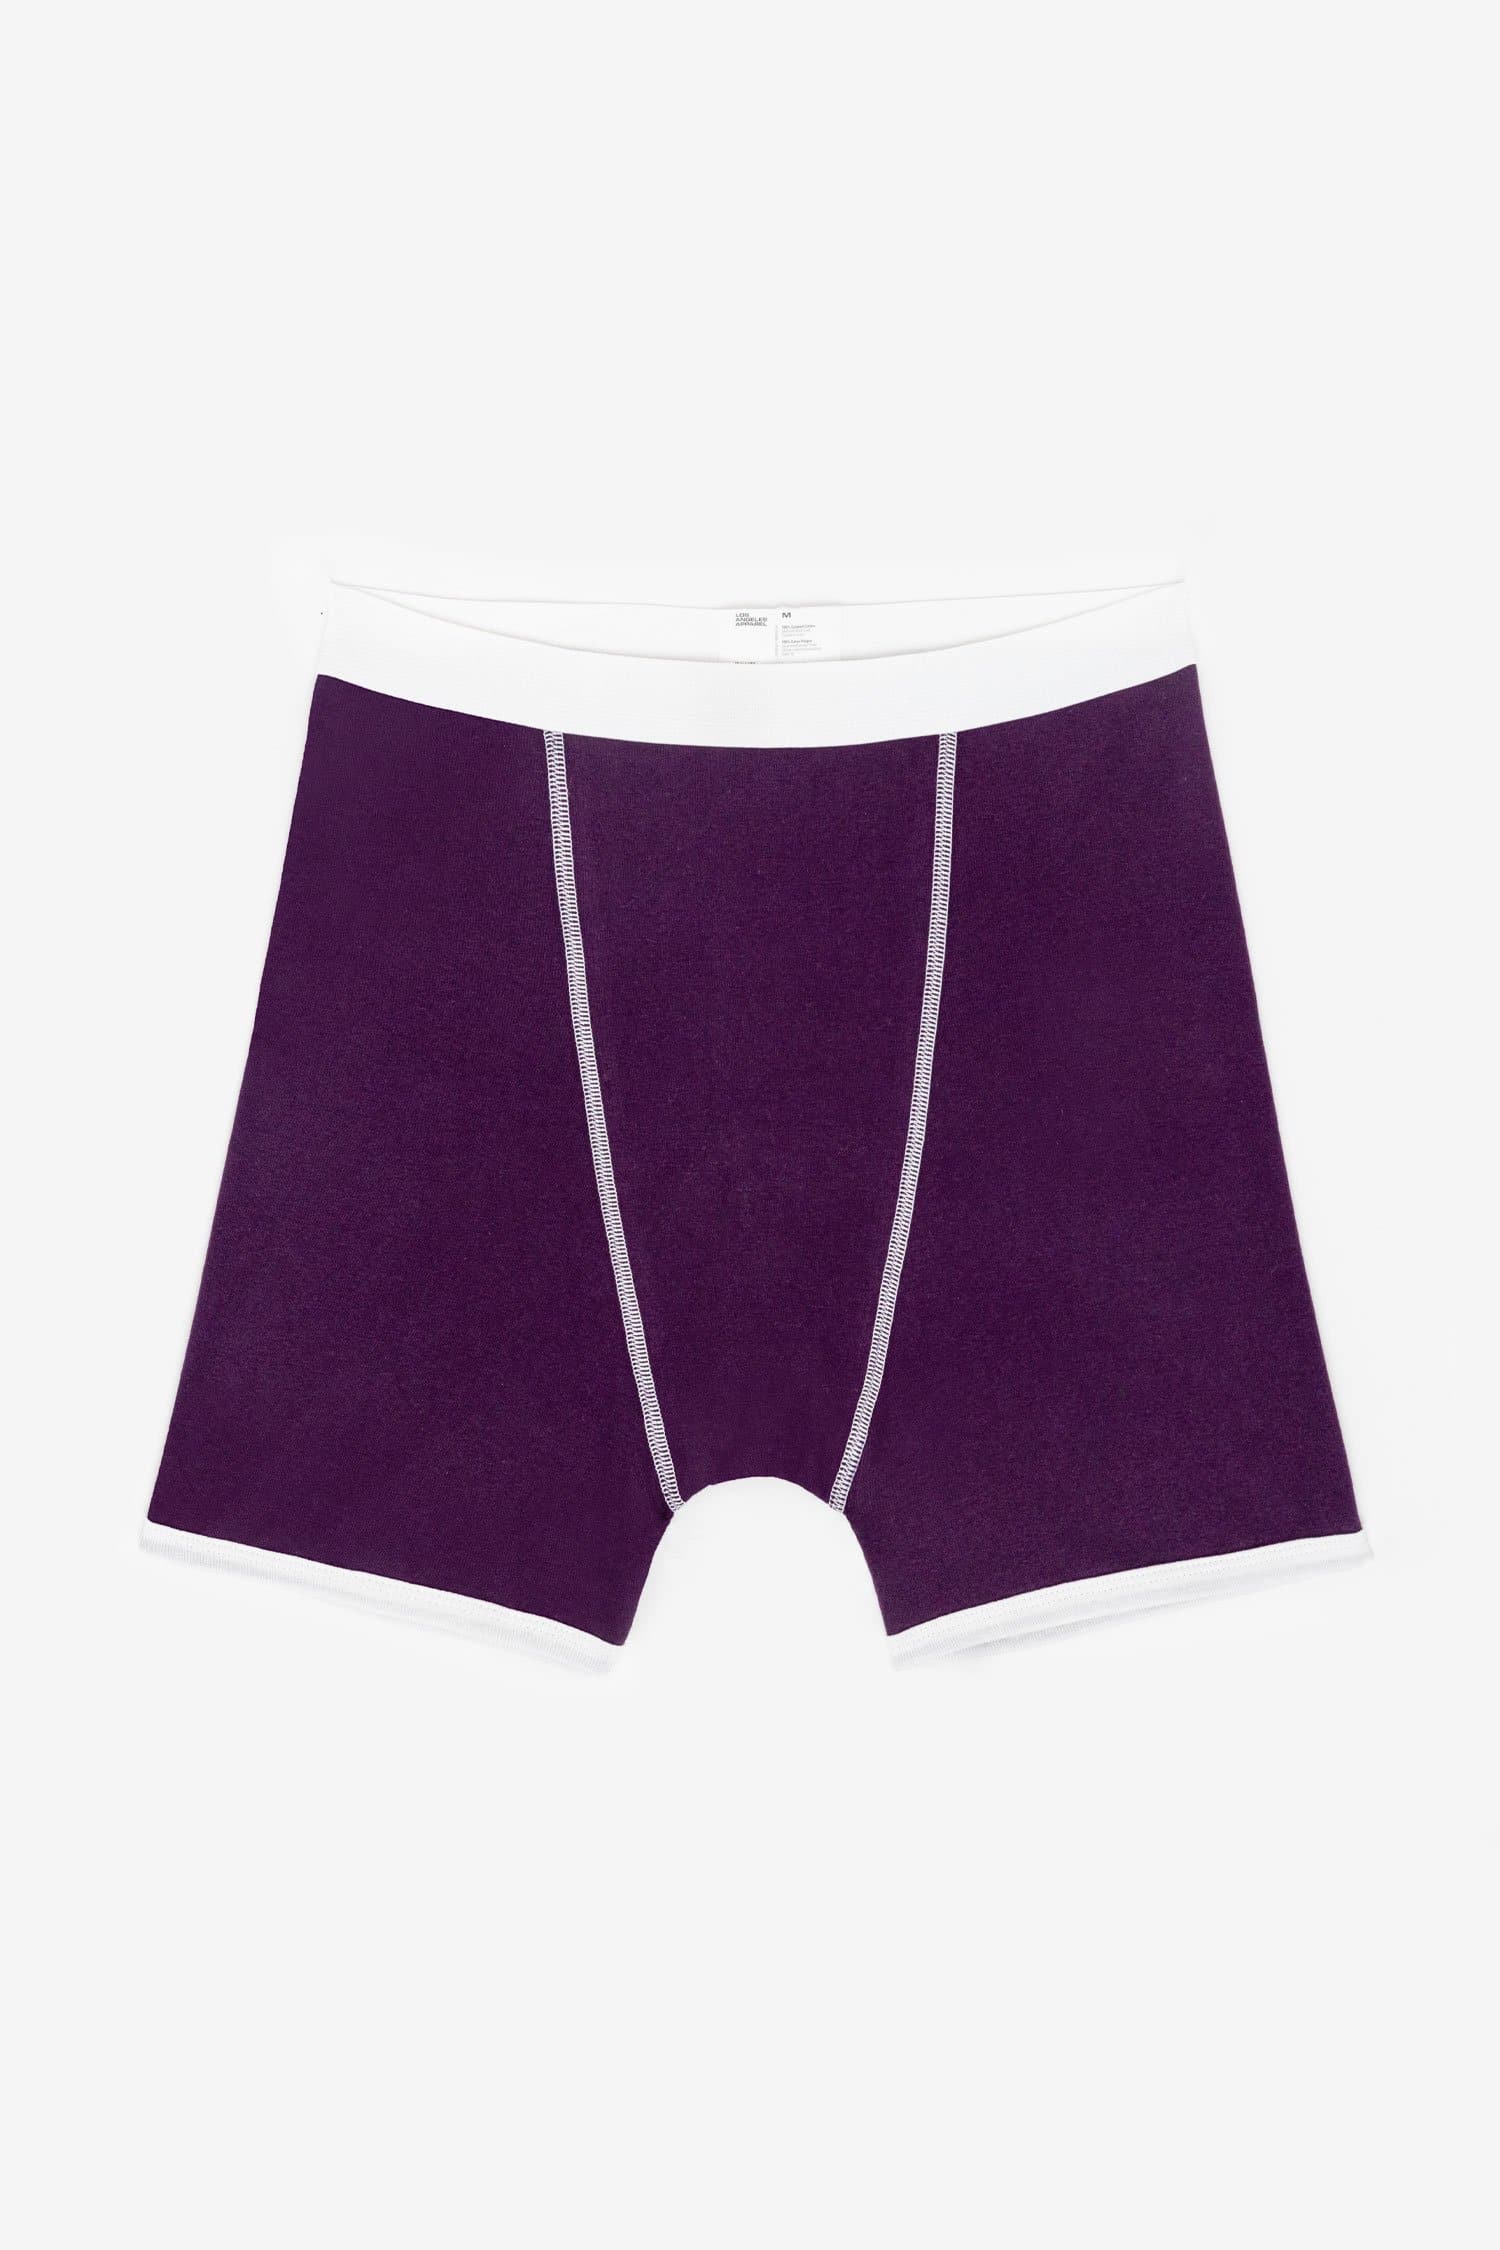 N2N Bodywear Men Mauve purple ultra ribbed bikini swimwear underwear size M  L XL